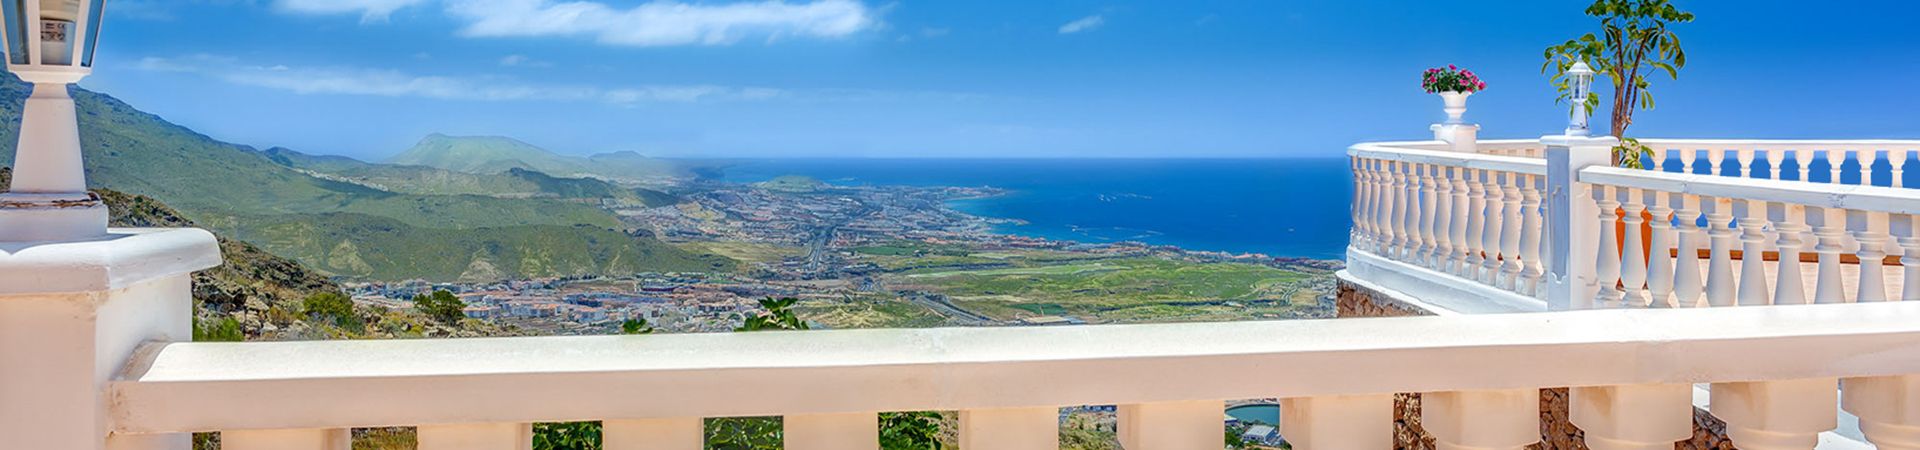 Luxury Villa For Sale in Tenerife